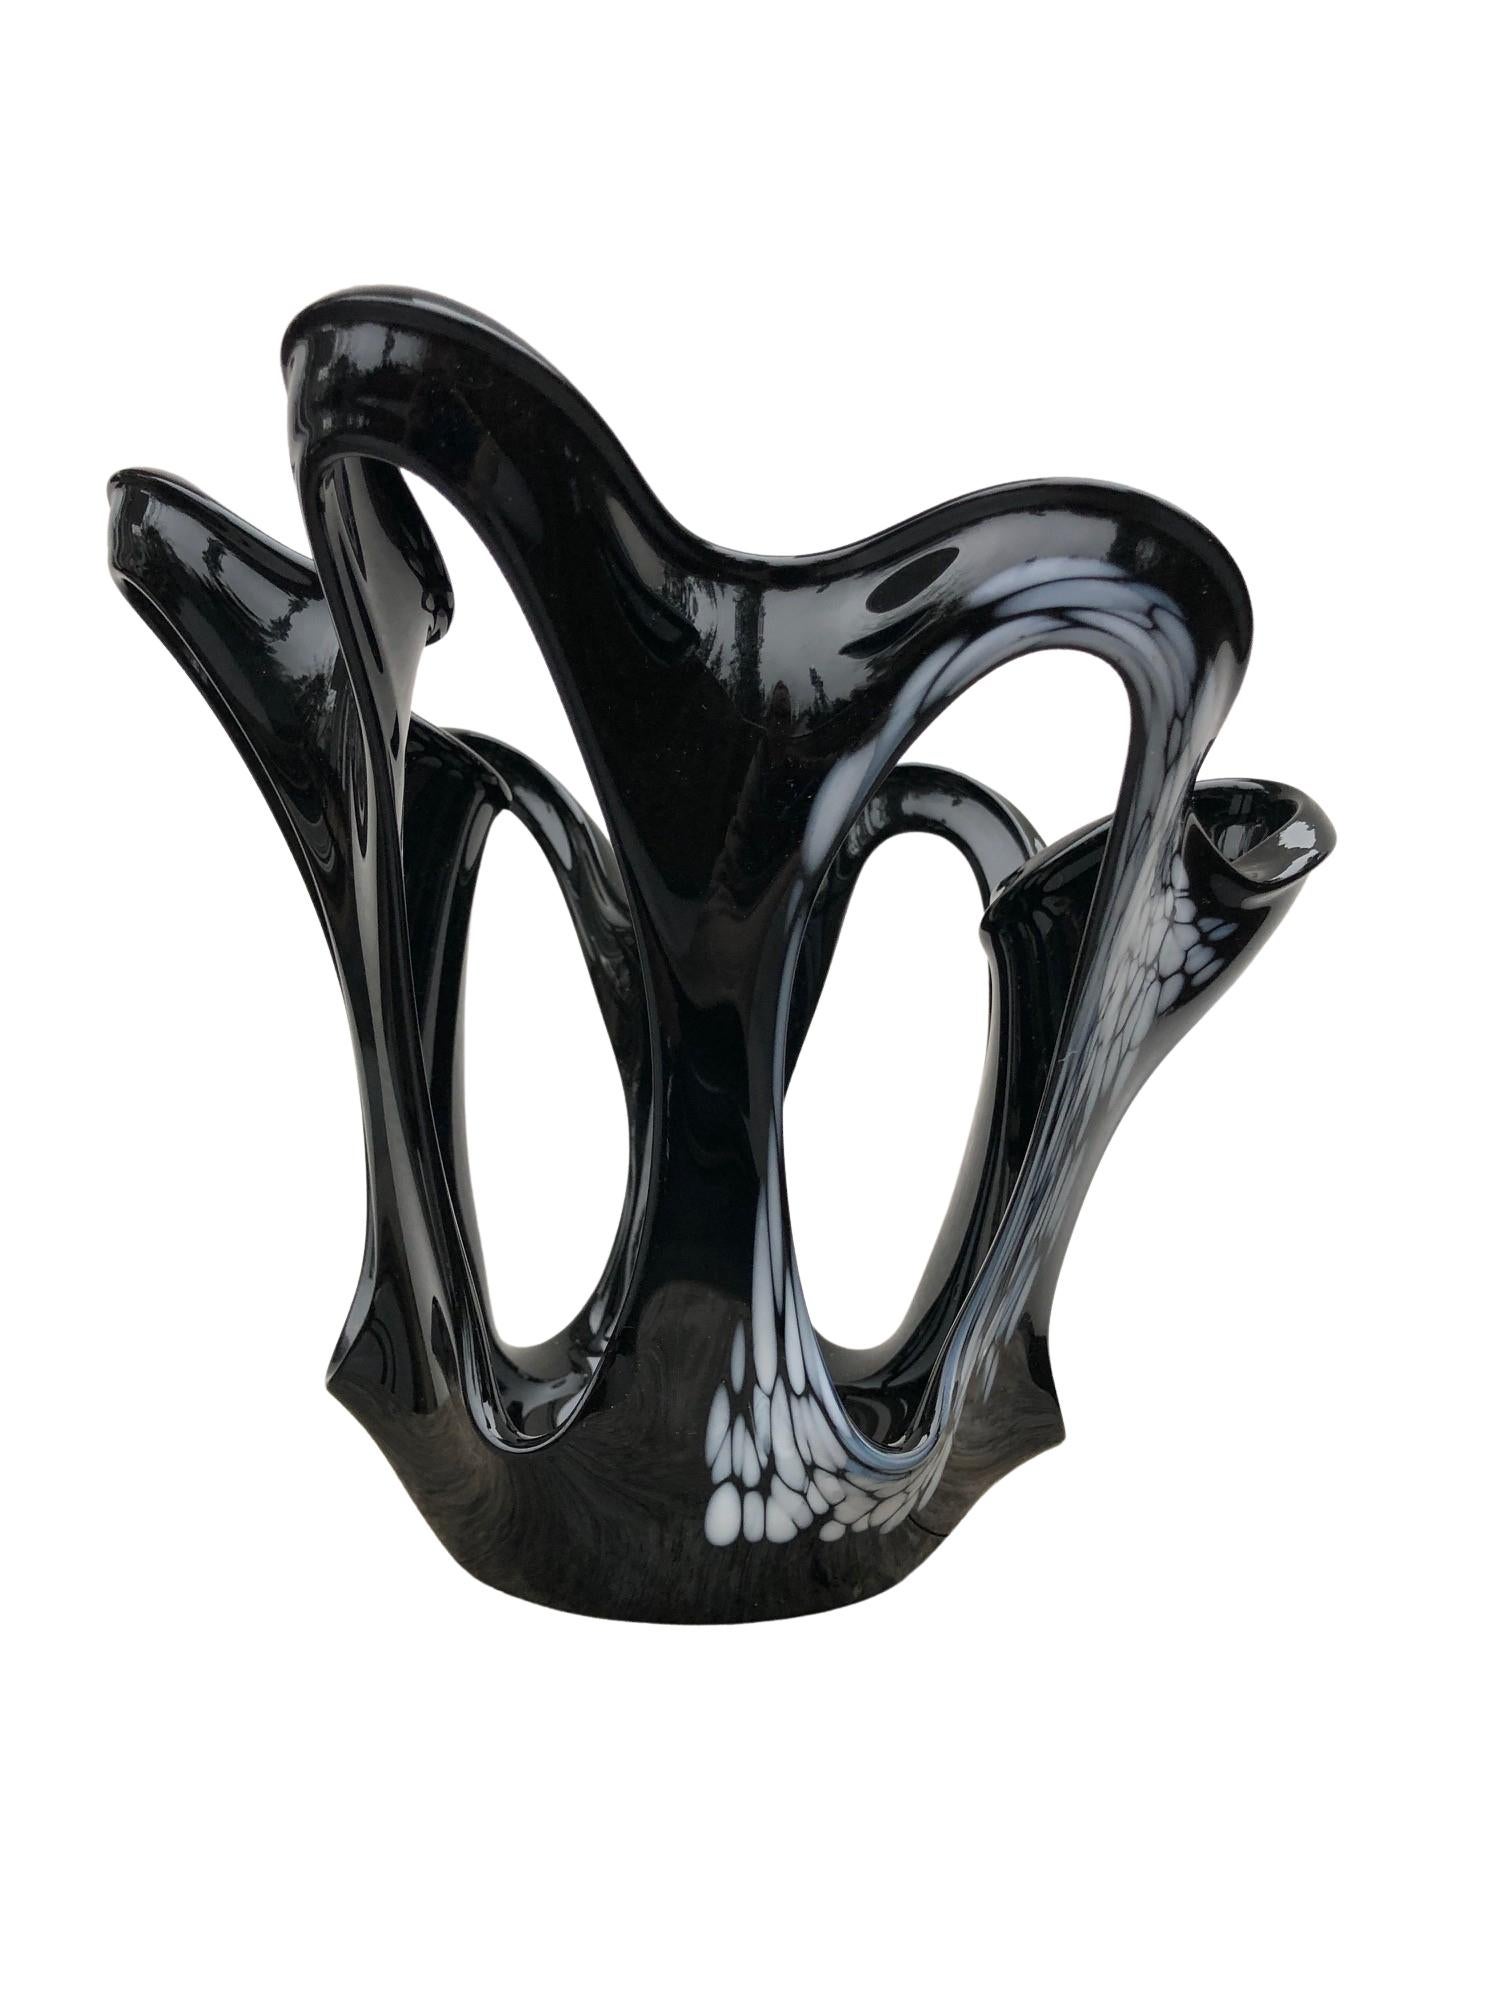 20th Century Mid-Century Black Vase in Organic Shape, Europe, 1960s For Sale